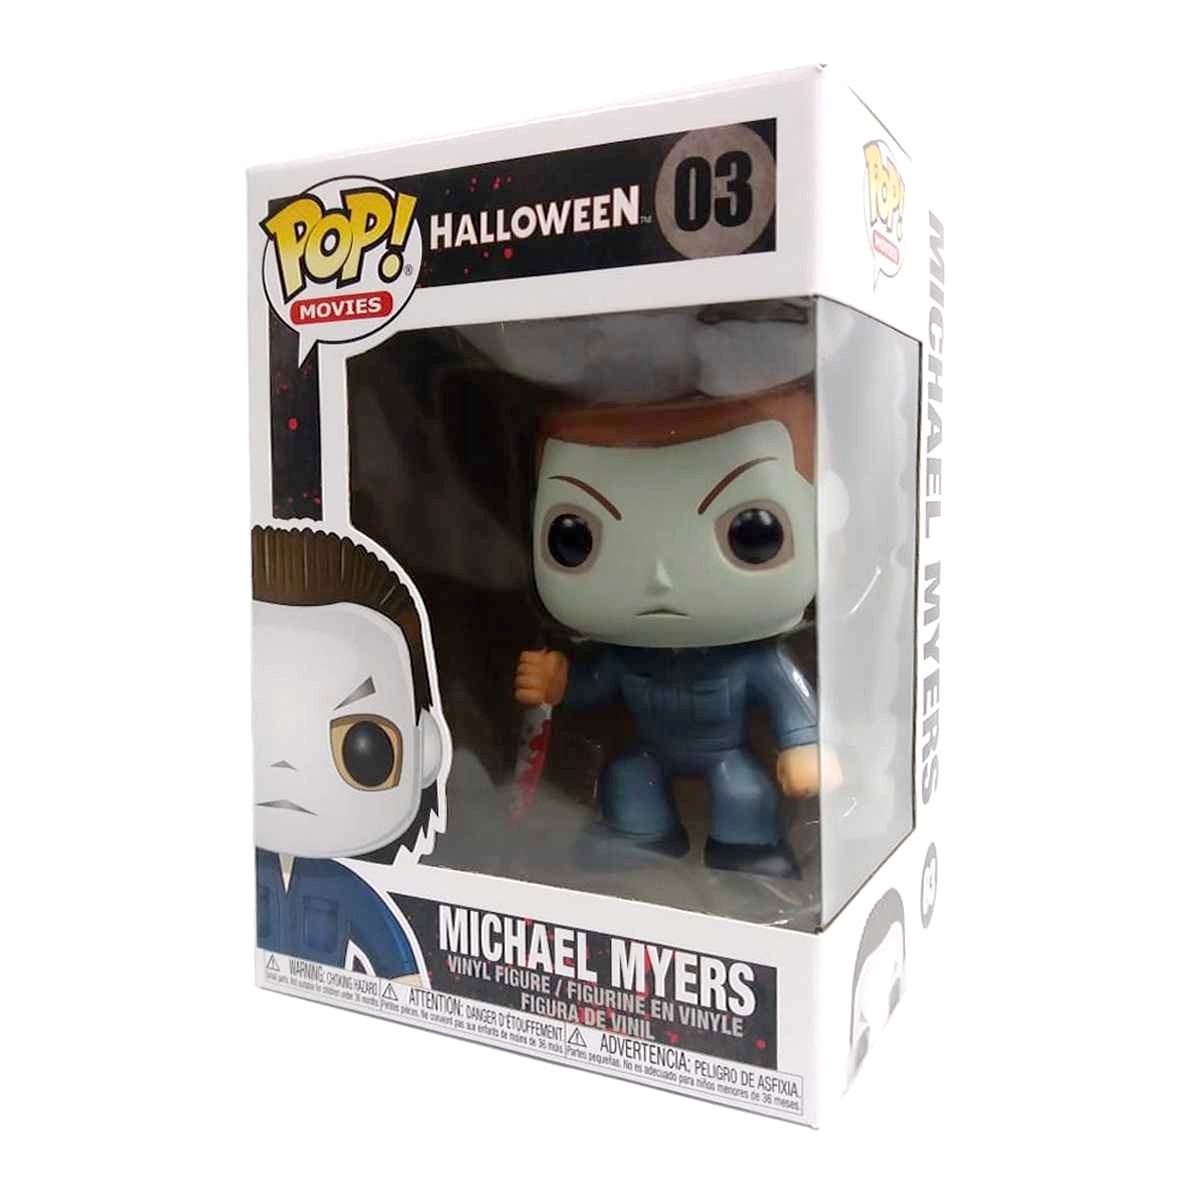 Funko Pop! Movies Halloween Michael Myers vinyl figure número 03